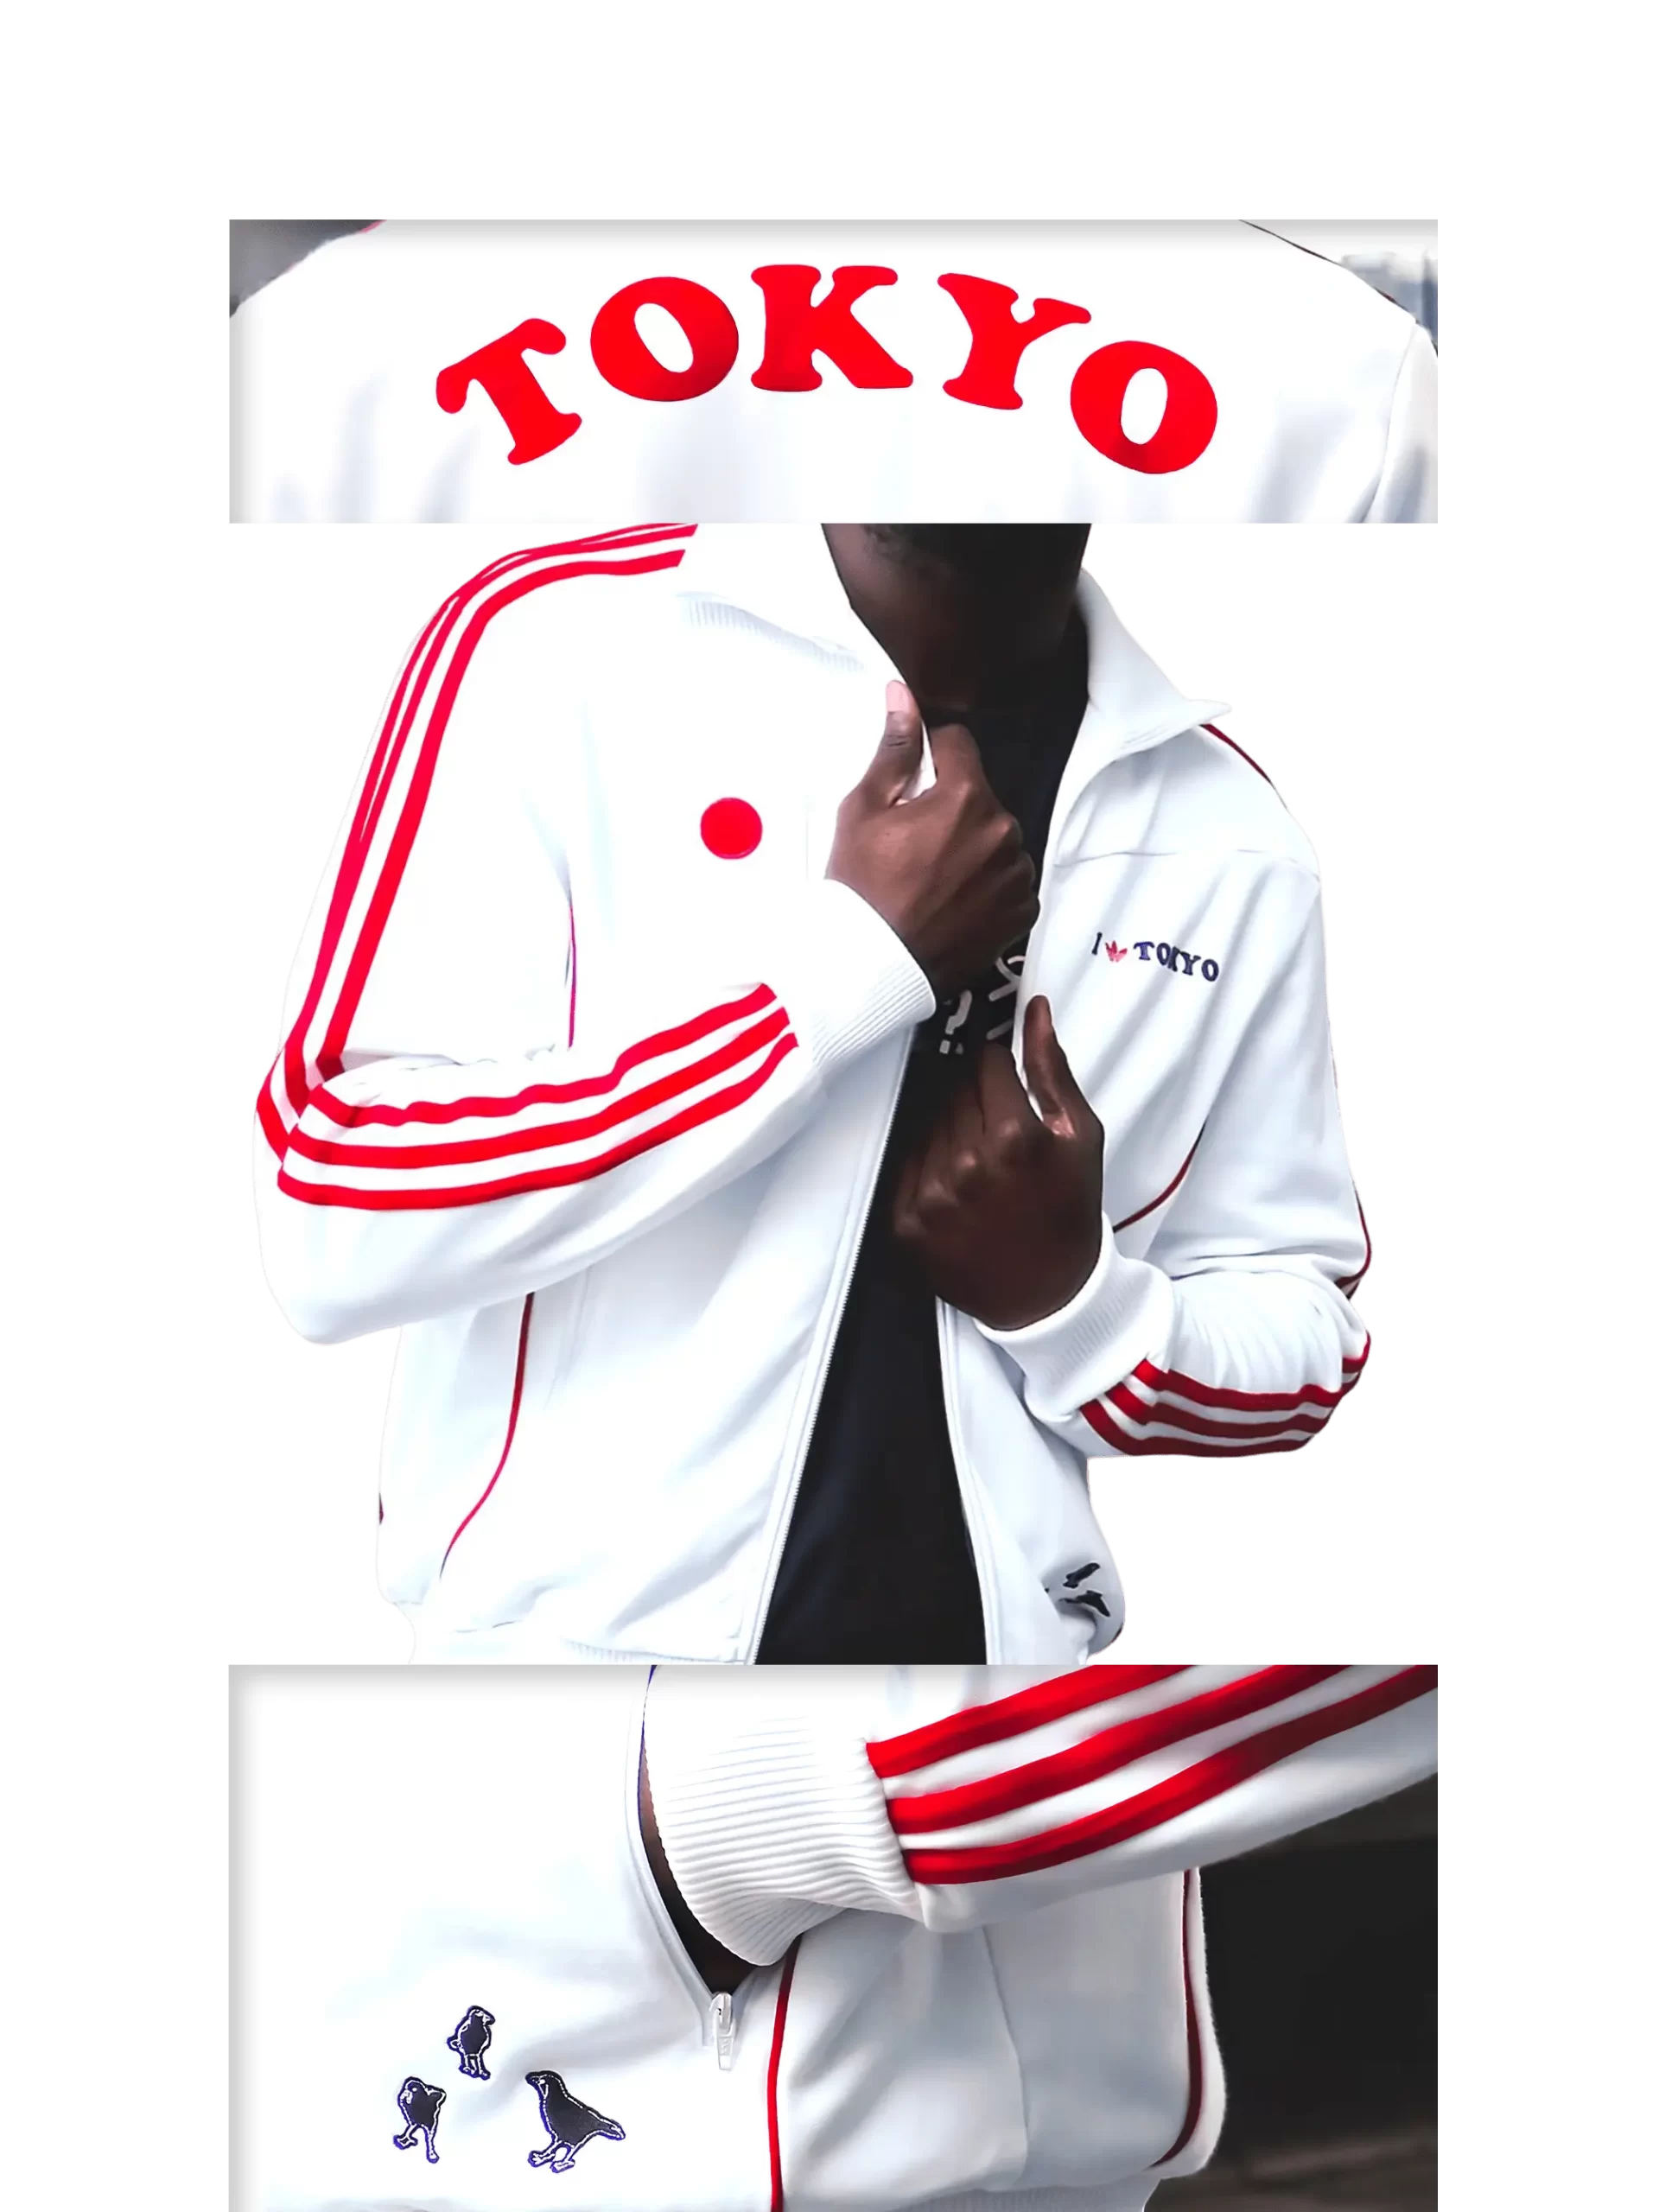 Men’s 2006 Tokyo TT-Two by Adidas Originals: Dazzling (EnLawded.com file #lmchk42528ip2y122011kg9st)